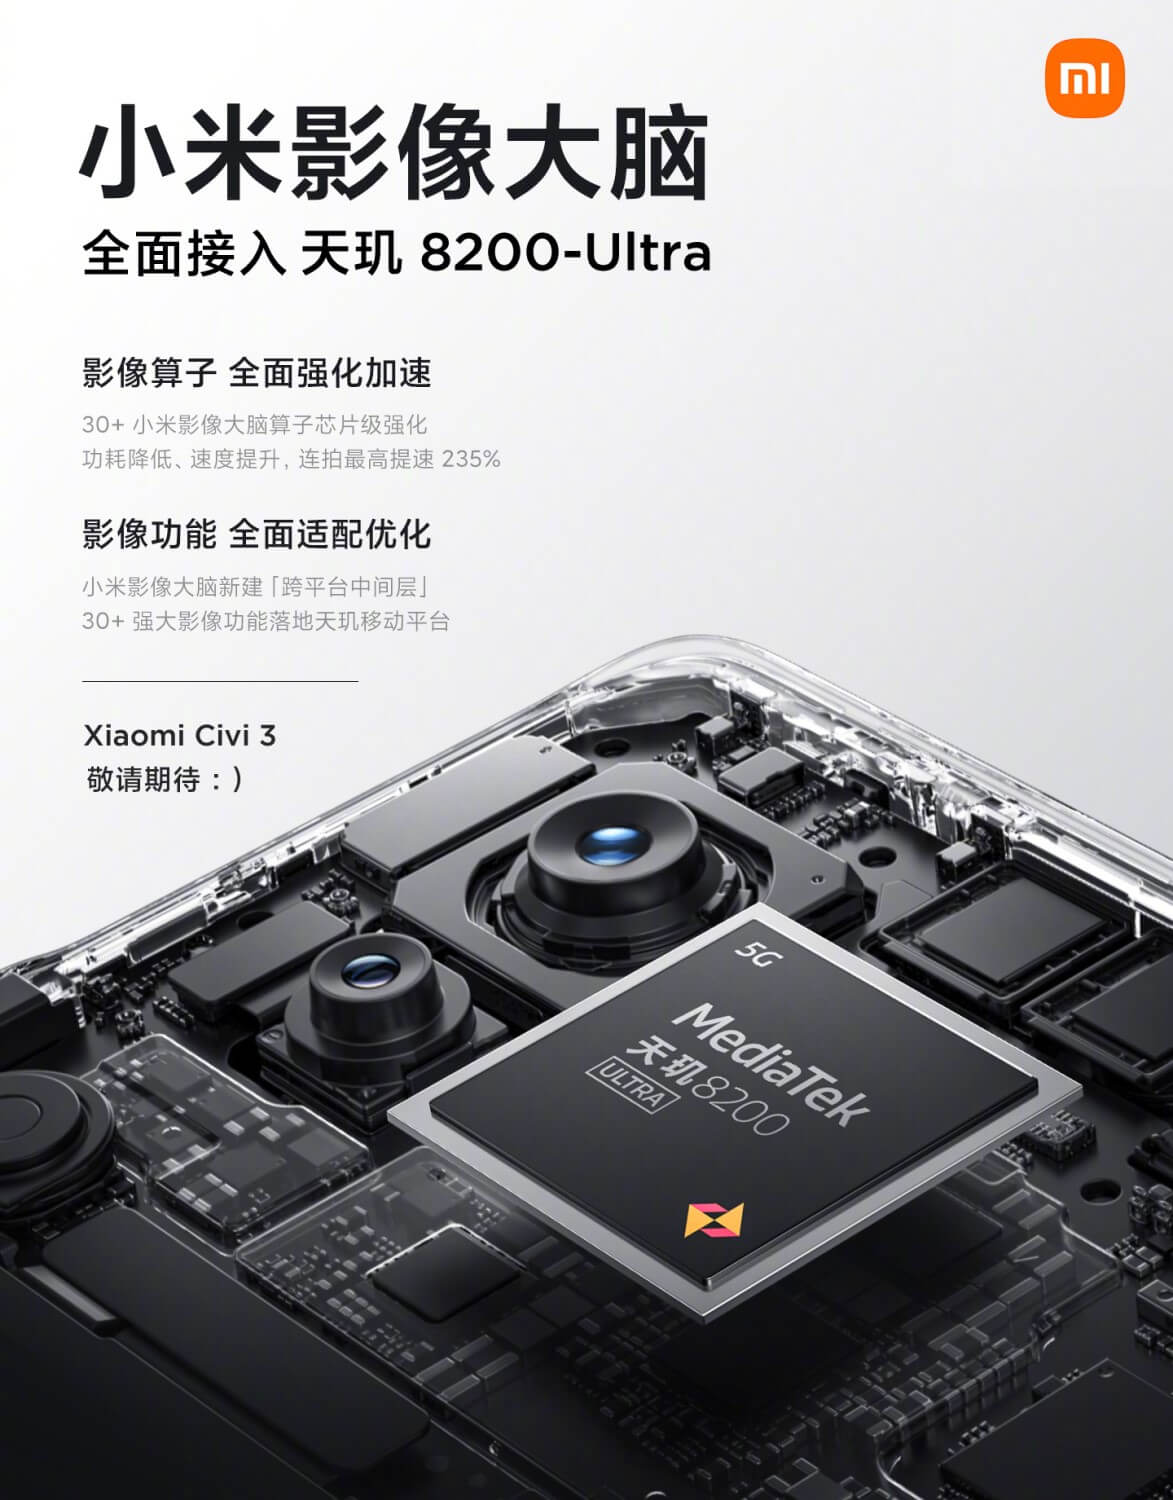 Xiaomi CIVI 3 MediaTek 8200 ultra cn